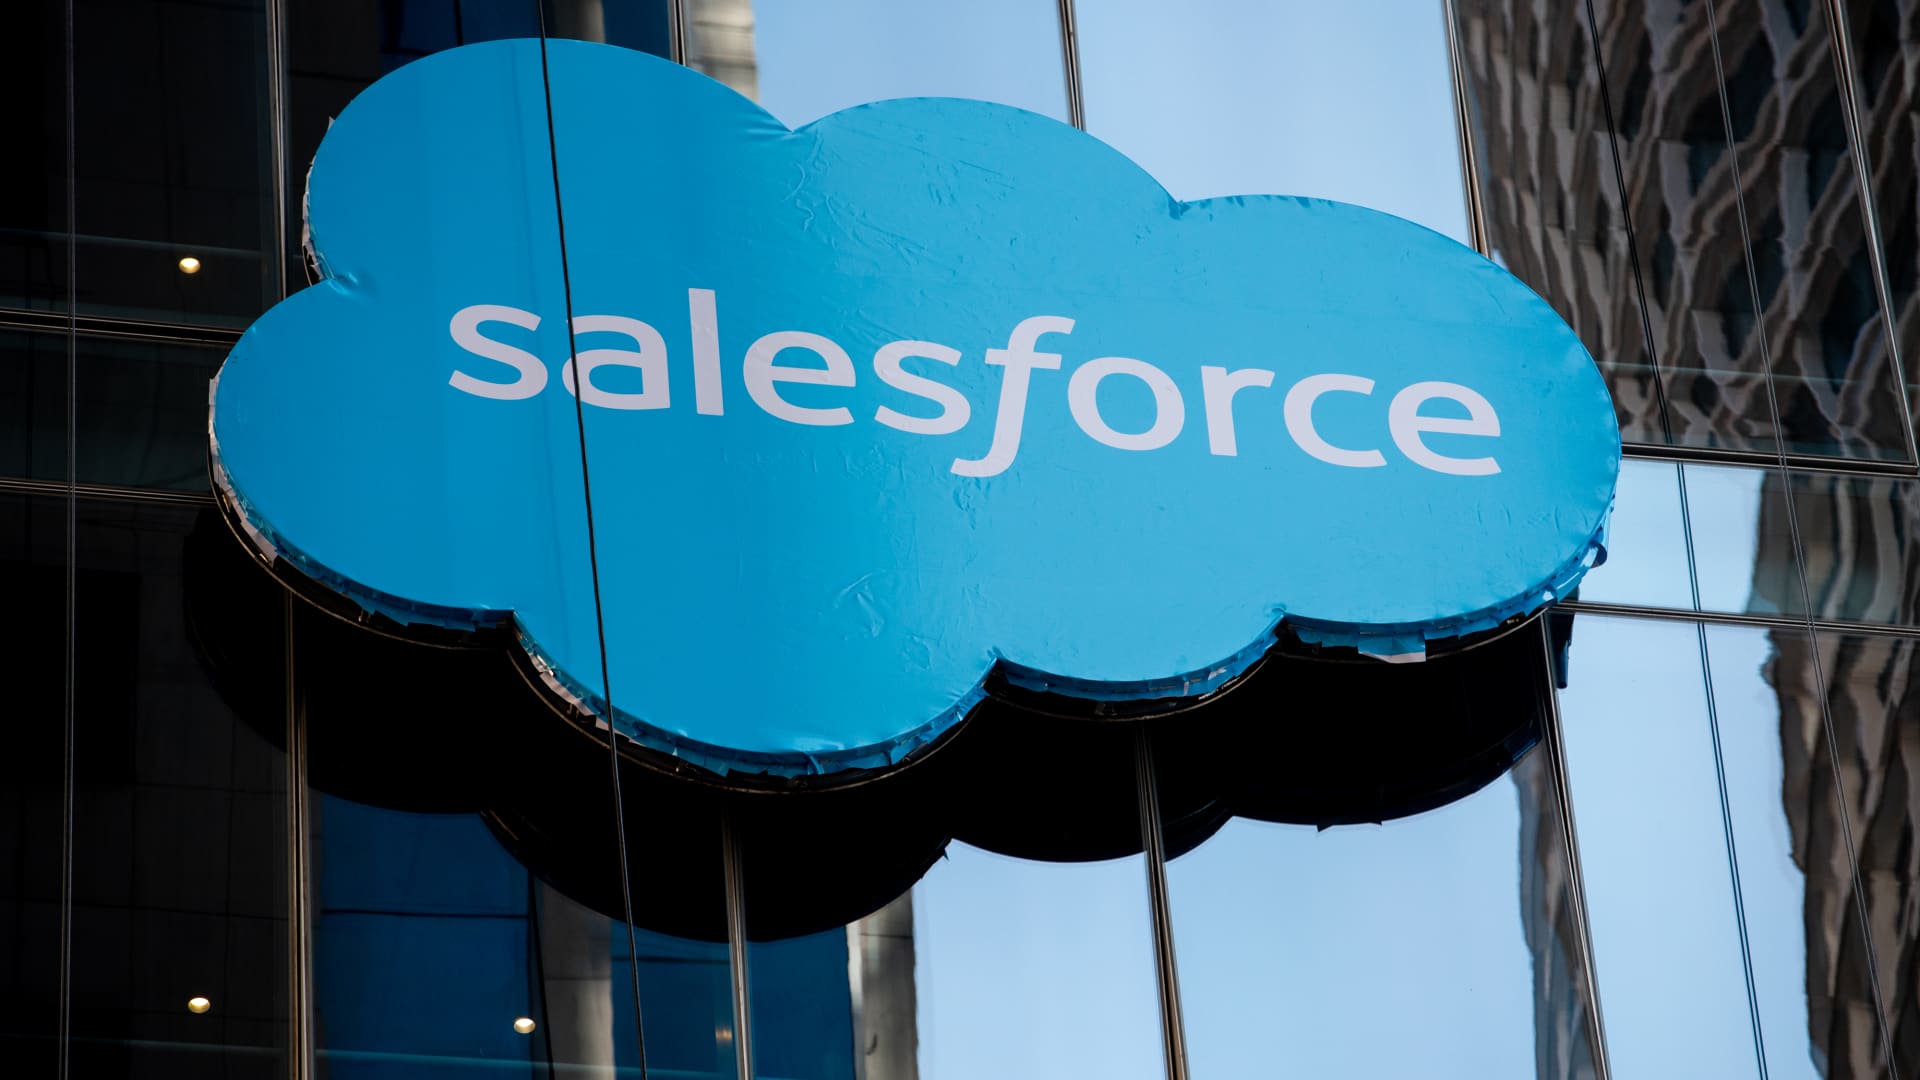 Elliott nominates slate of directors to Salesforce board, sources say